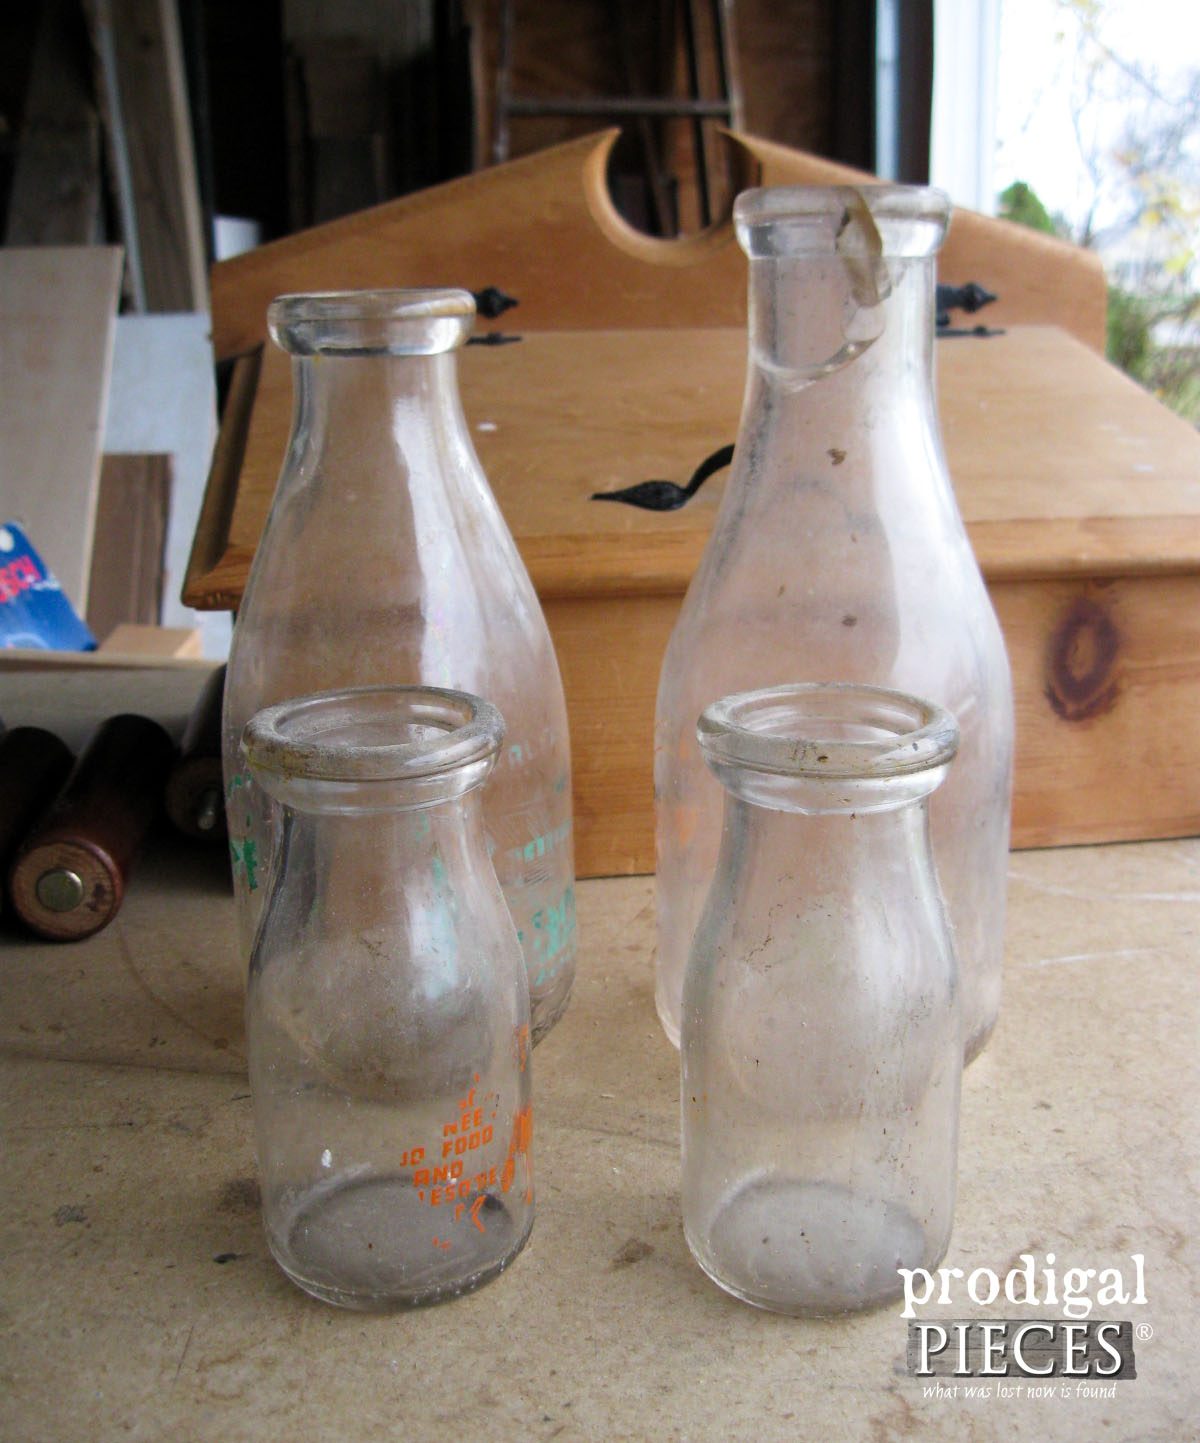 Antique Milk Bottles for Wooden Caddy Tutorial | Prodigal Pieces | www.prodigalpieces.com